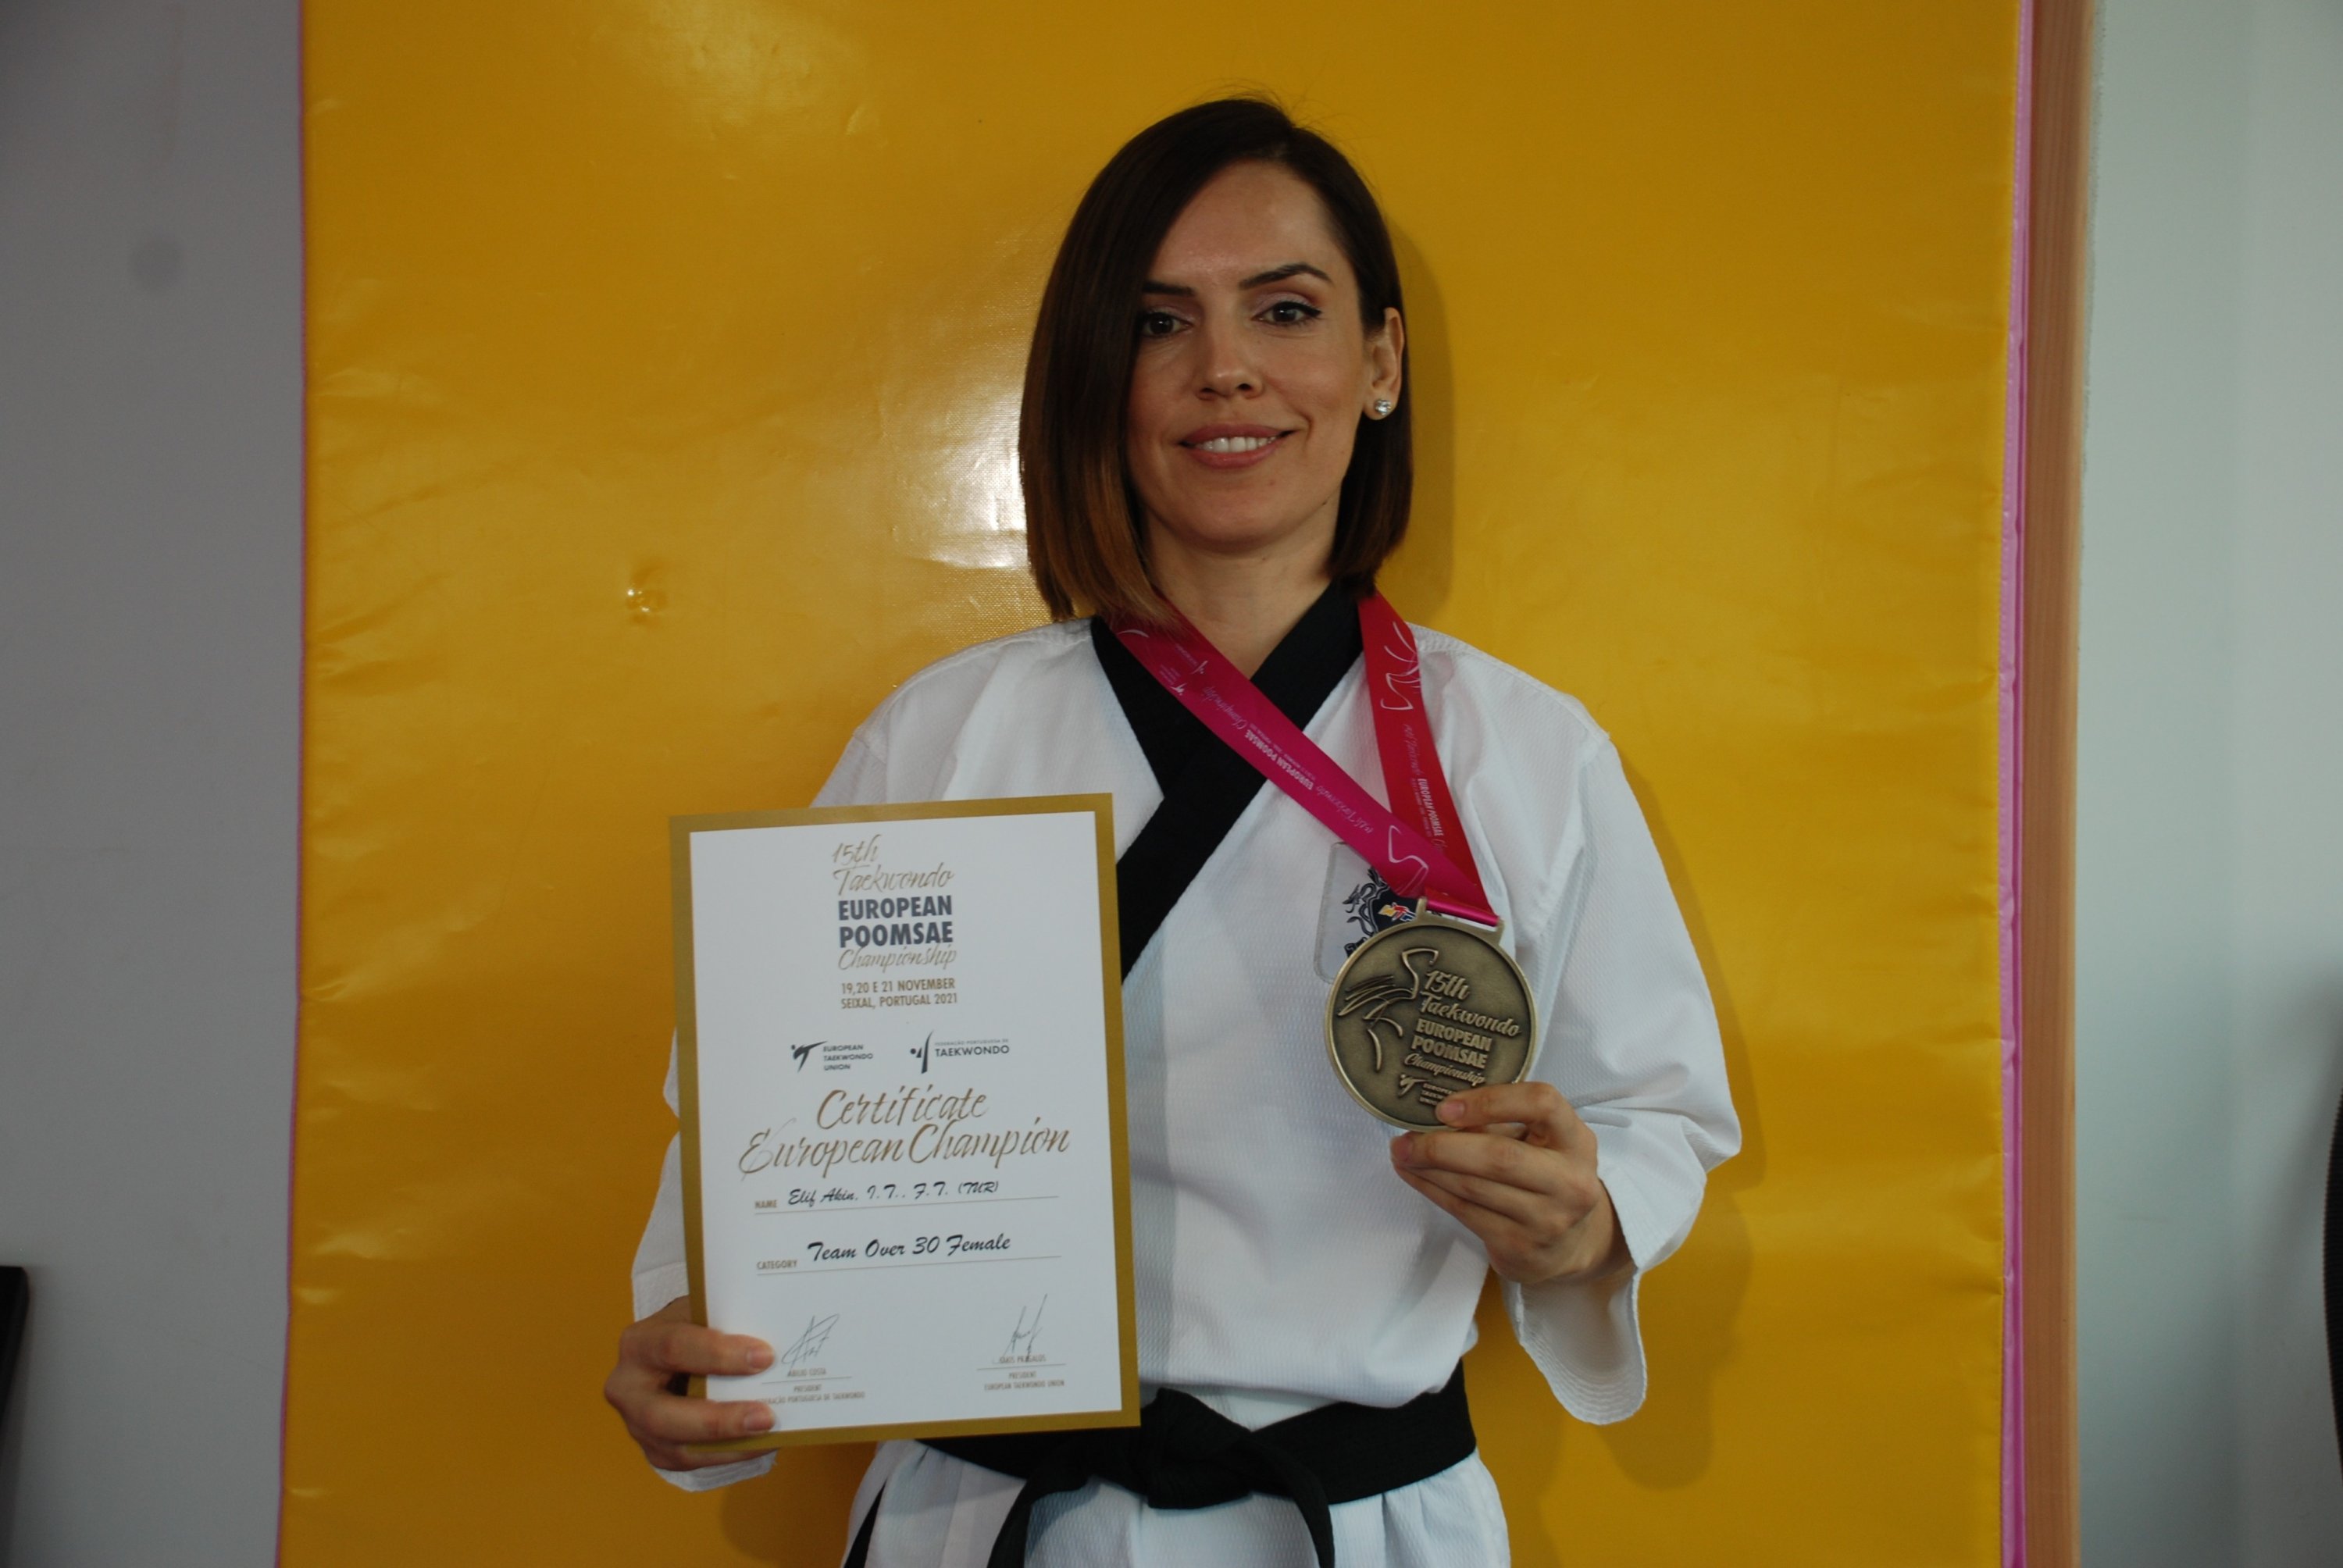 Guru pendidikan jasmani dan juara taekwondo Elif Soytürk Akın dengan medali dan sertifikat dari Kejuaraan Pumse Taekwondo Eropa yang dia menangkan, Izmir, Turki, 24 November 2021 (Foto IHA) 